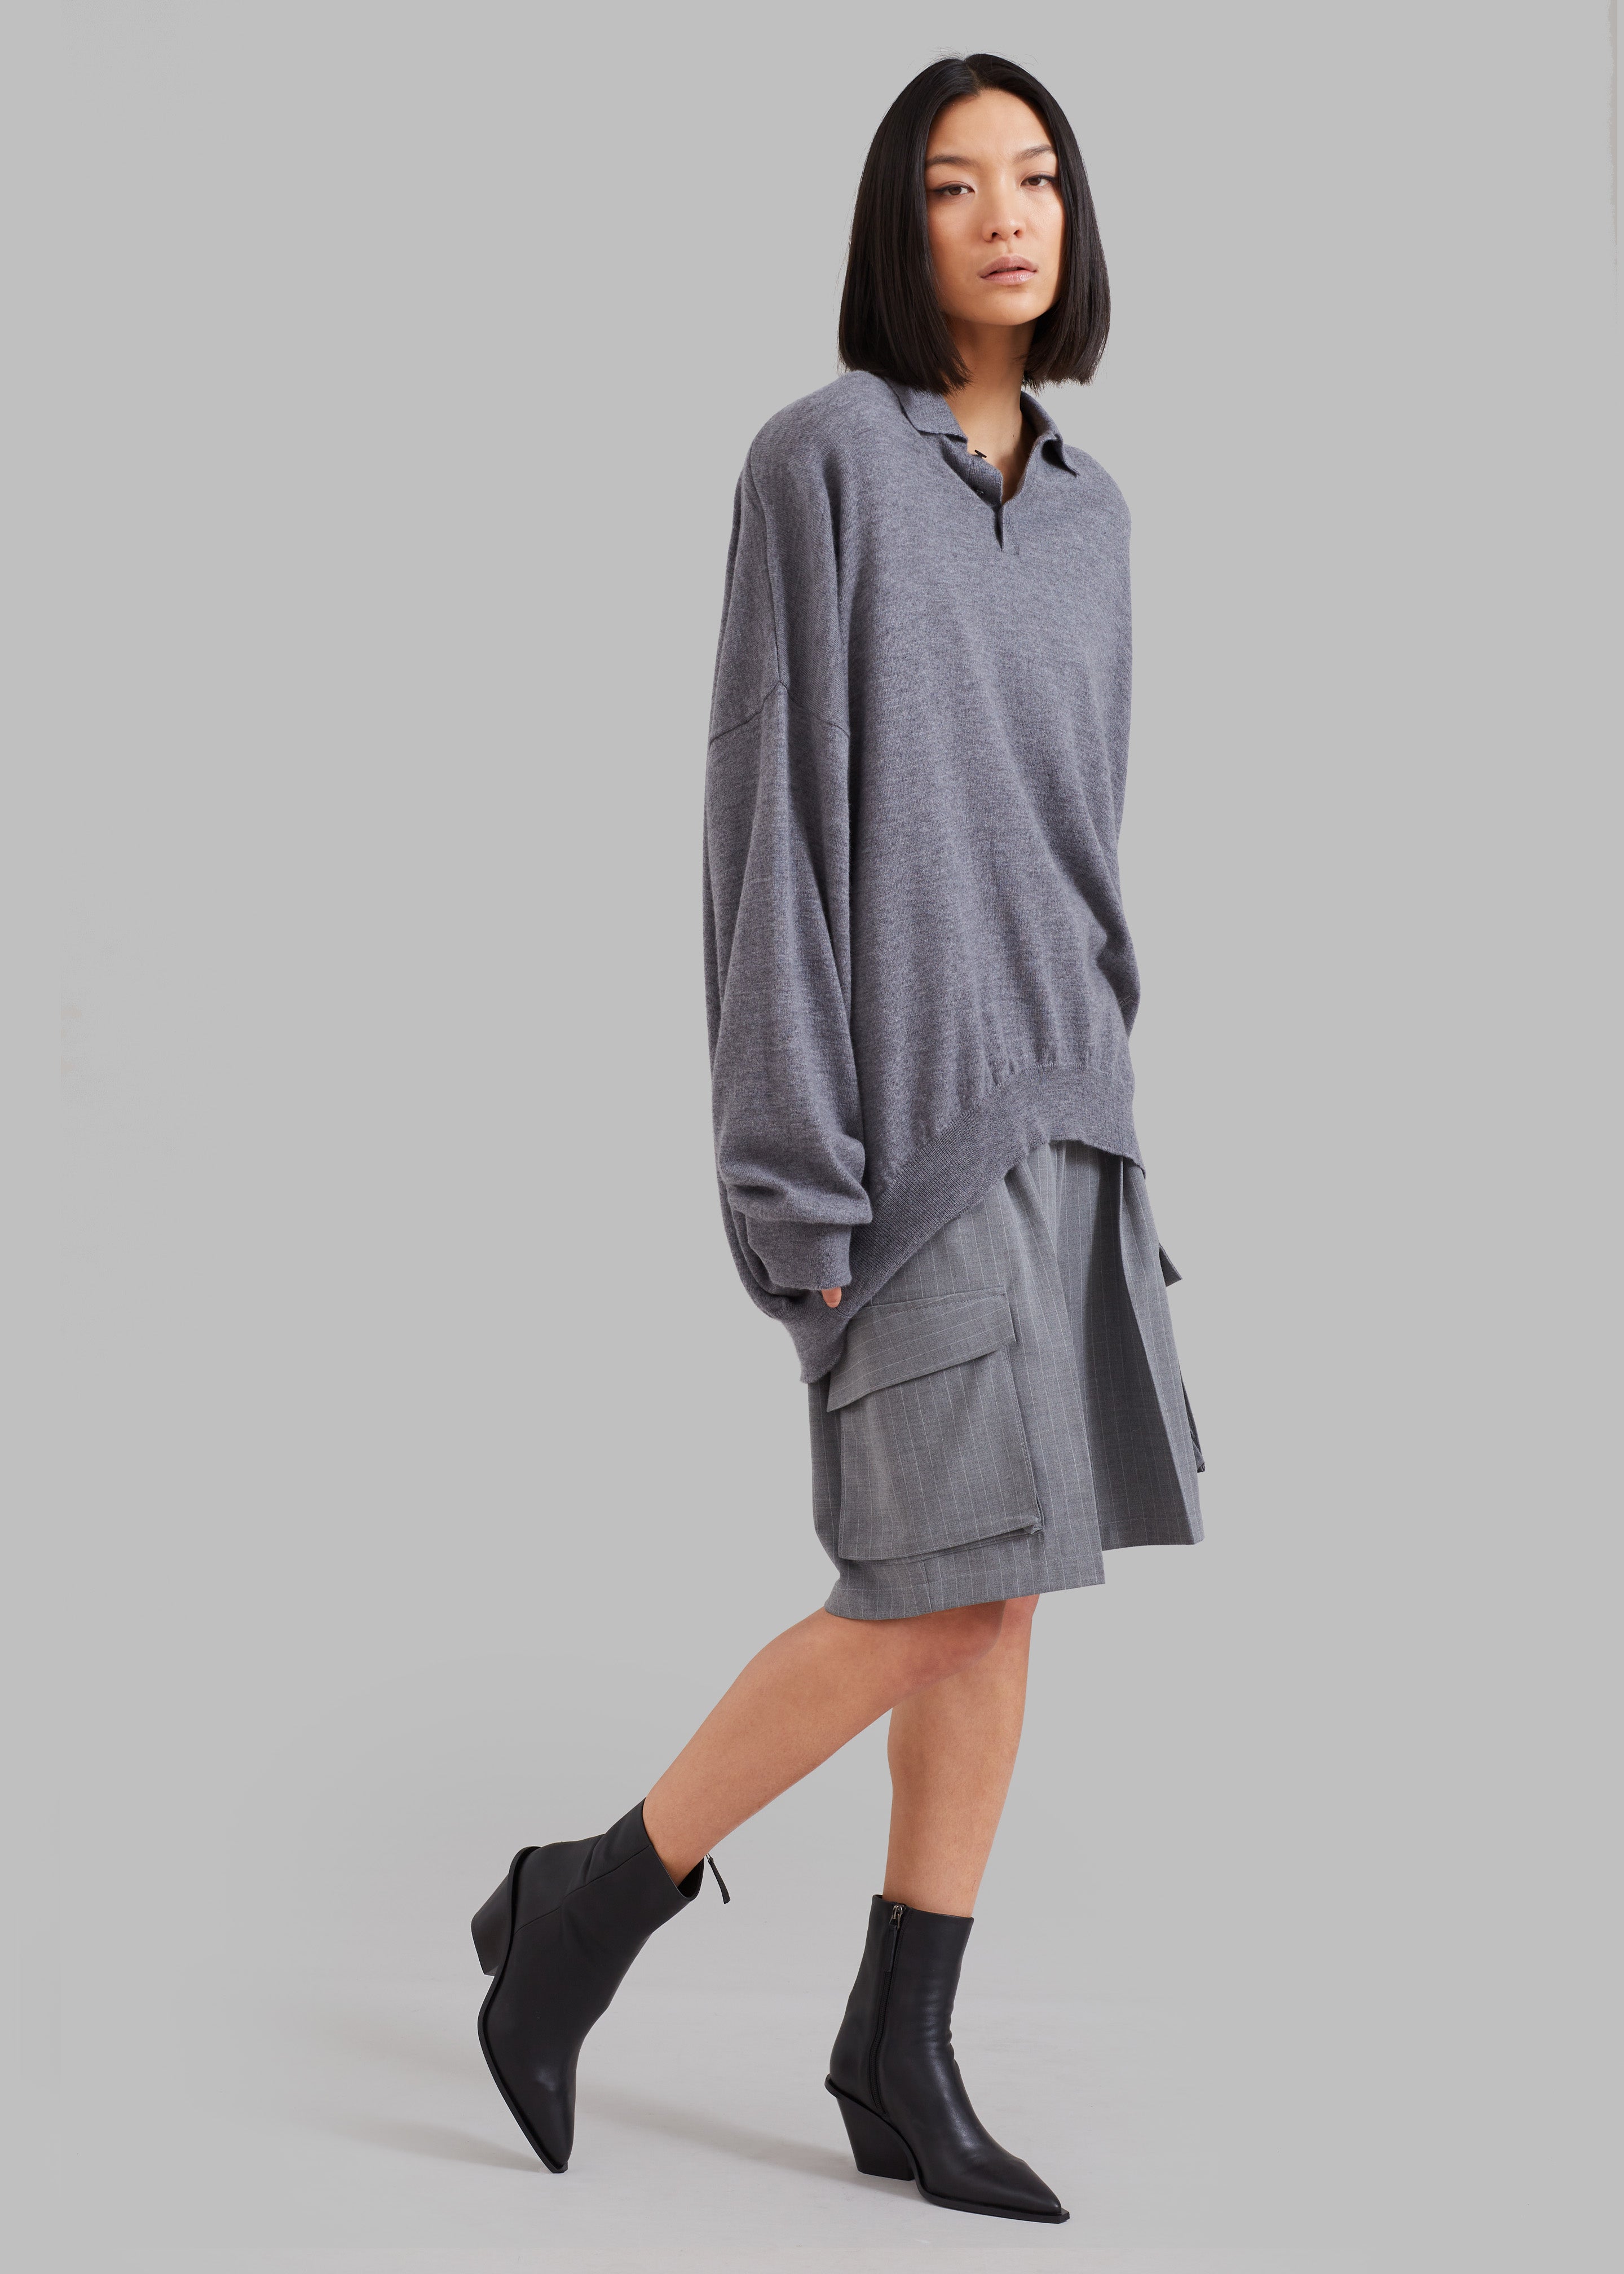 Meriel Polo Sweater - Grey - 5